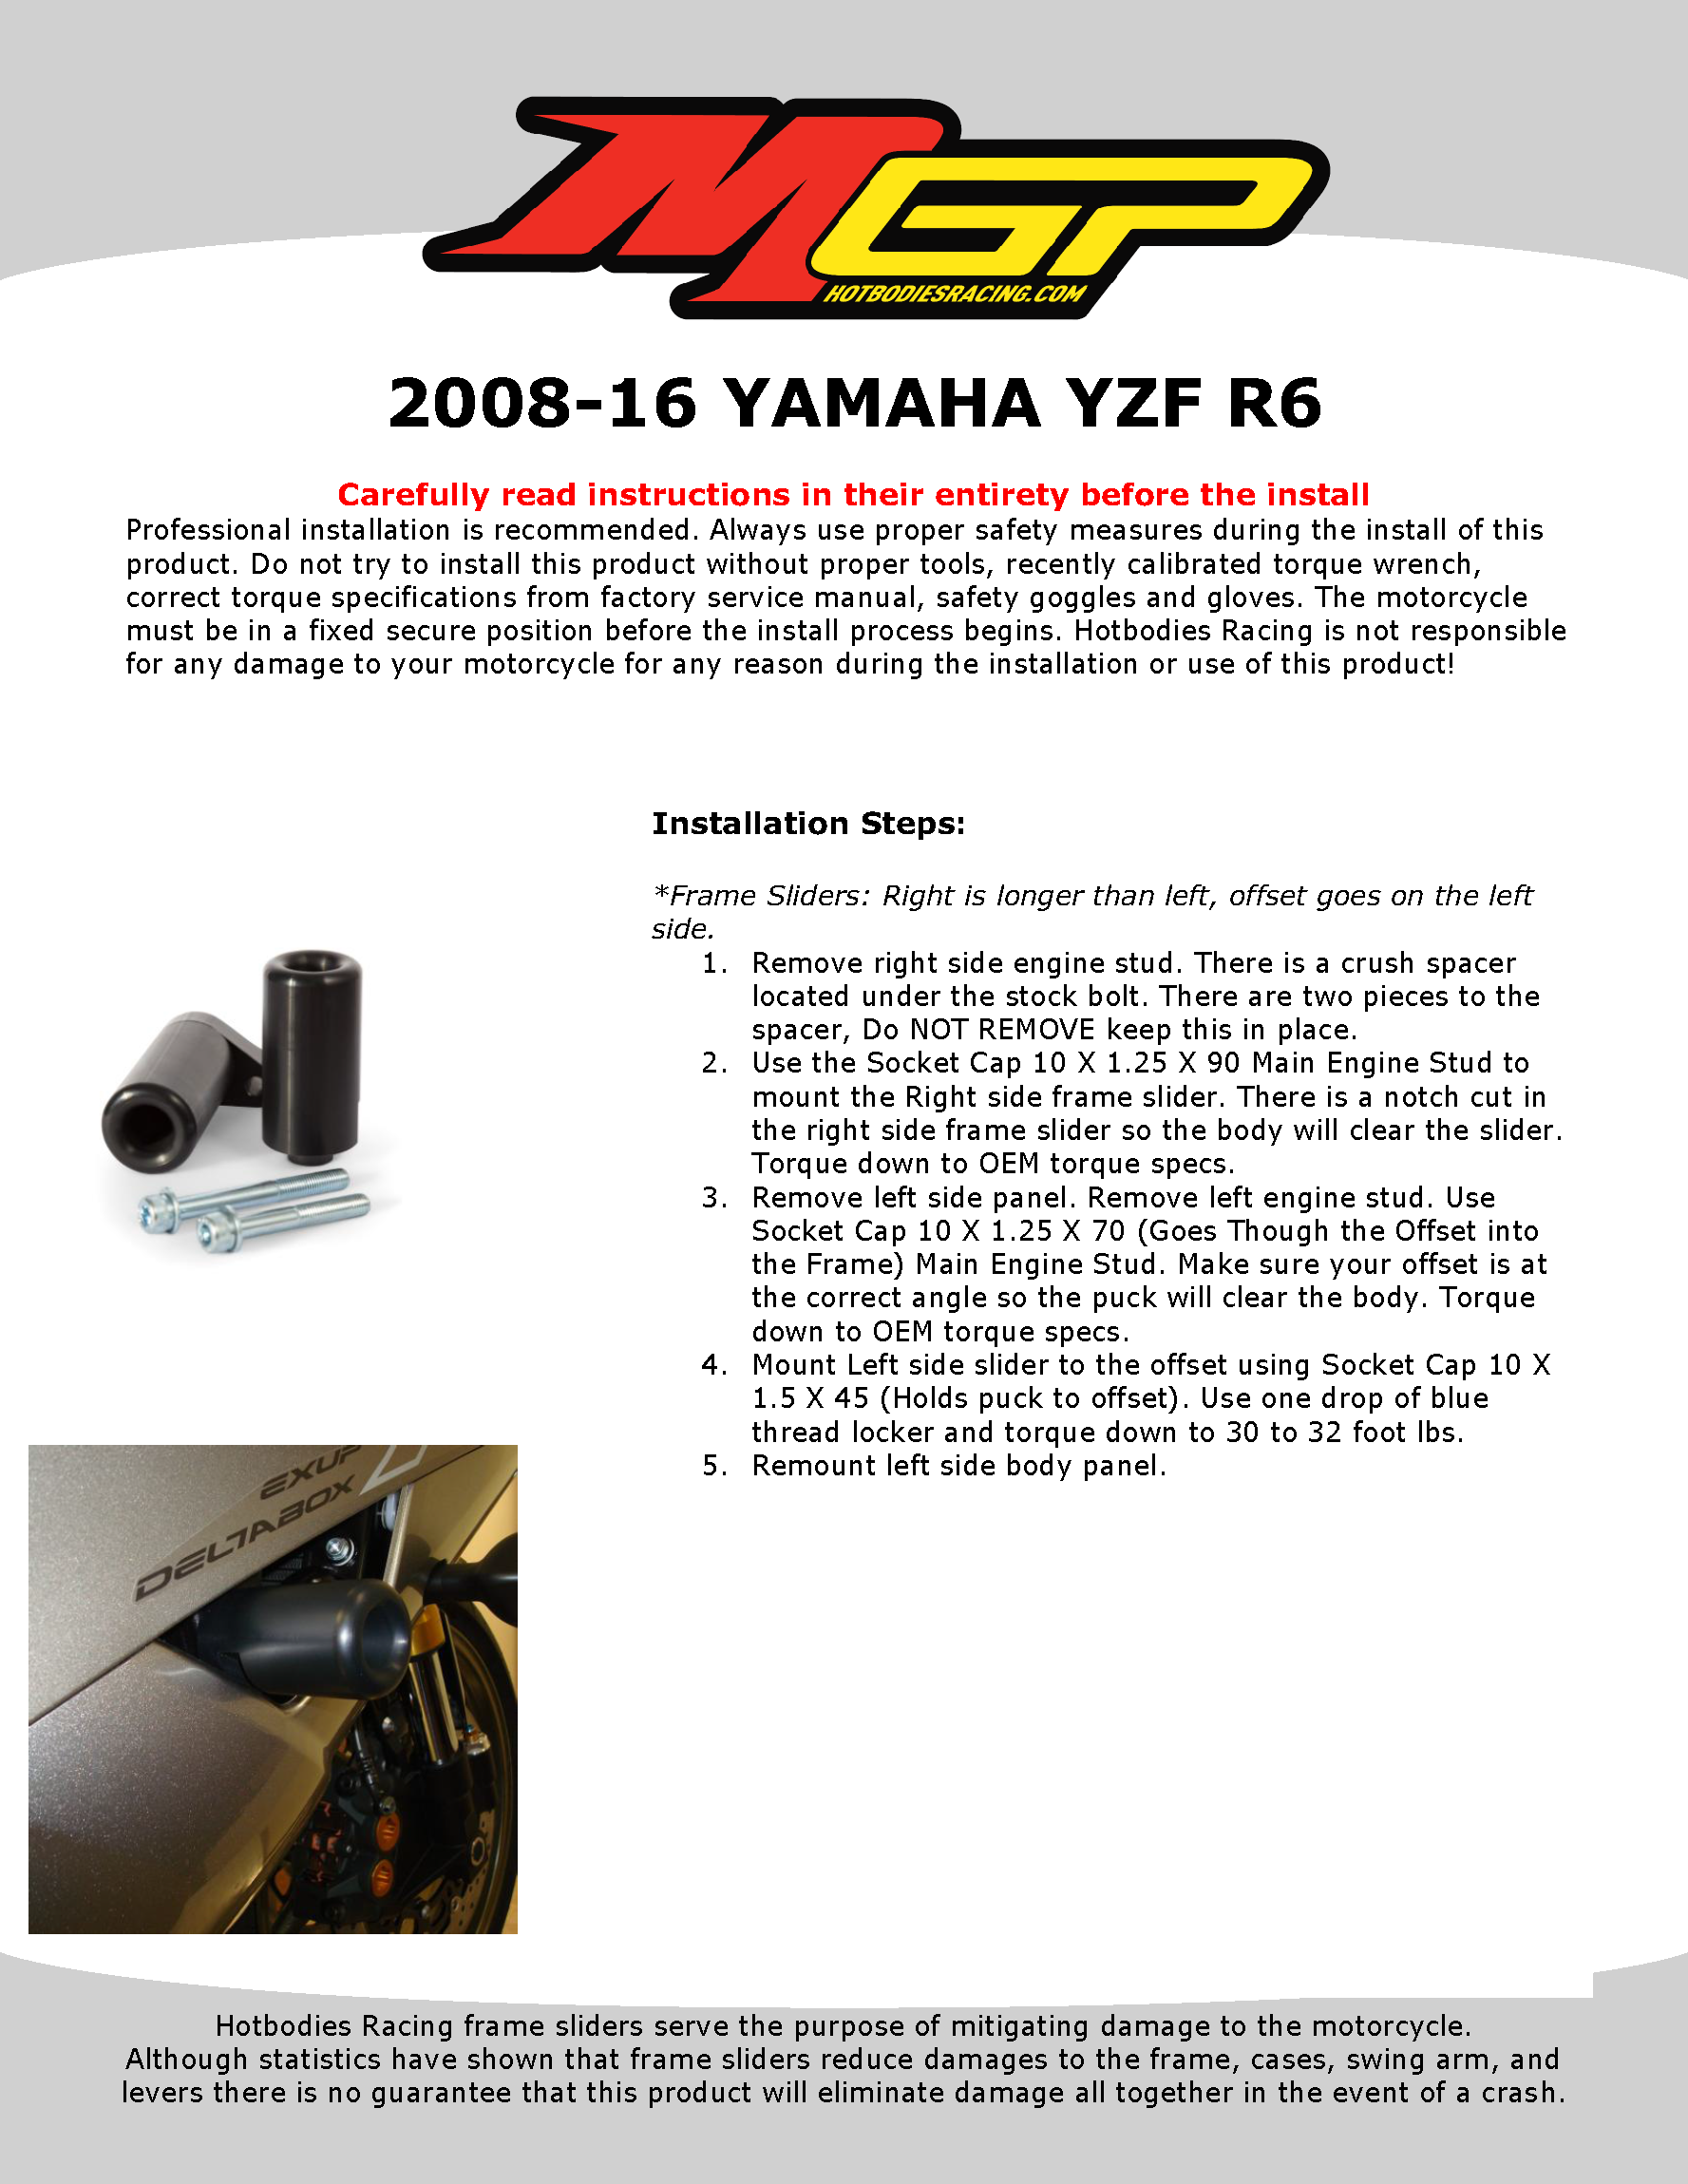 

2008-16 YAMAHA YZF R6 Frame Sliders Installation

